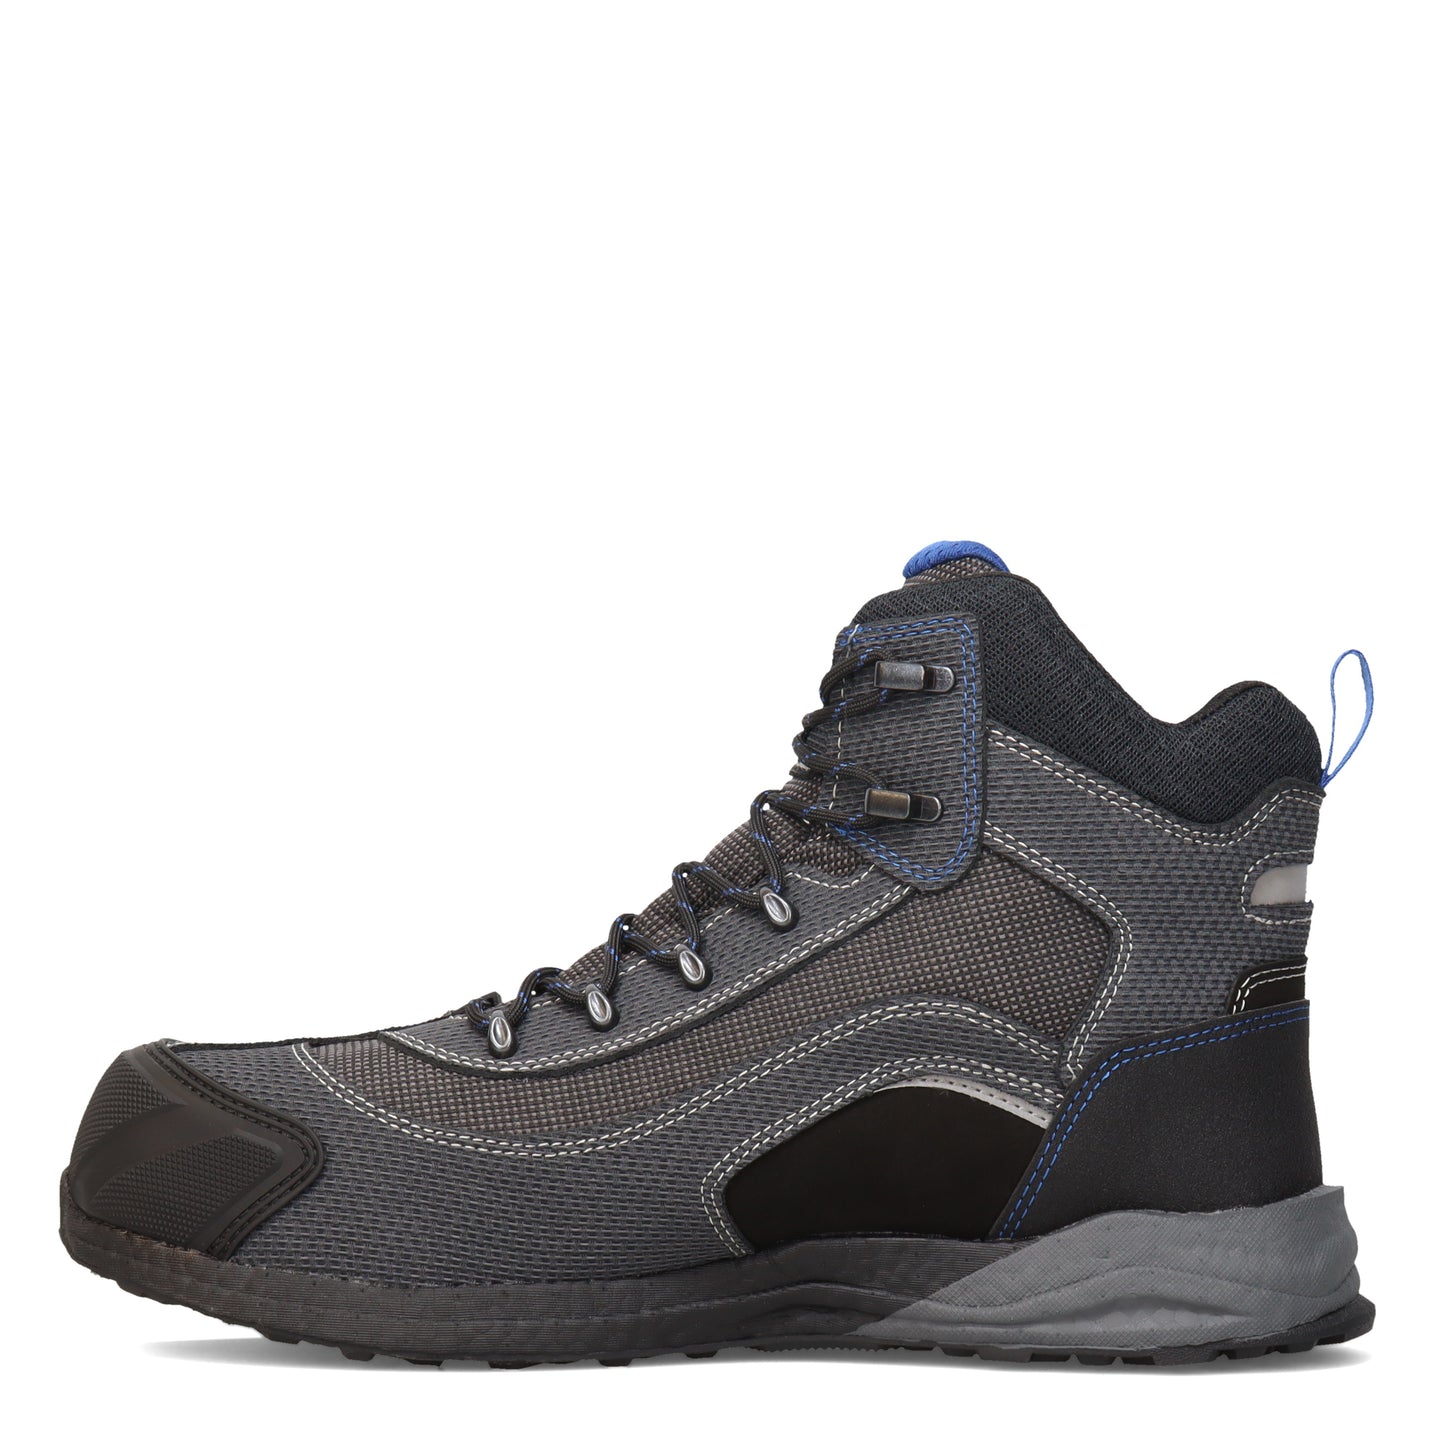 Peltz Shoes  Men's DieHard Lemans CT Waterproof Work Boot GRAY DH50500